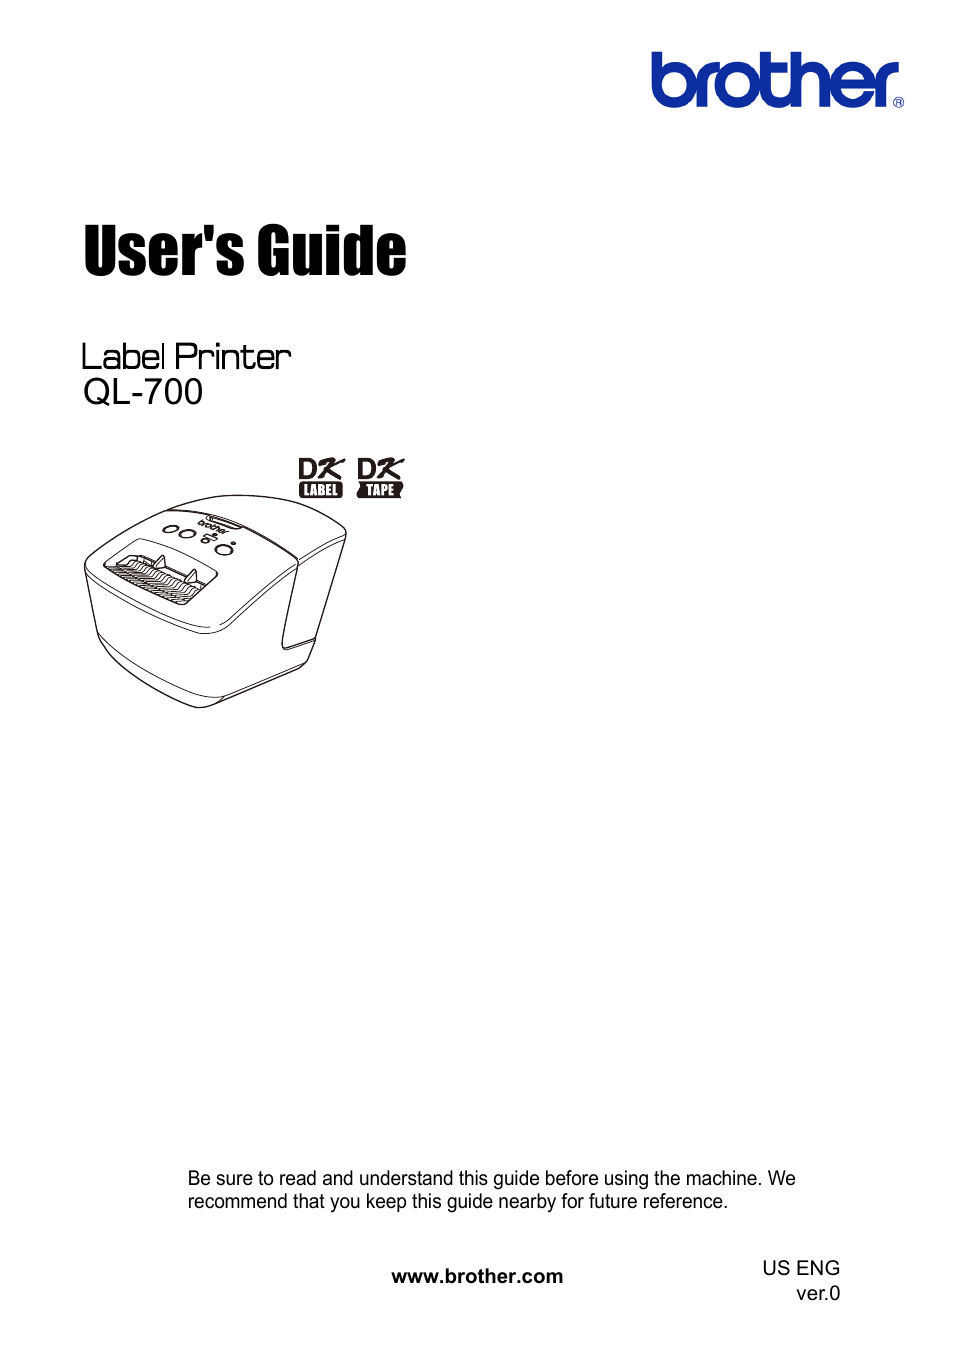 Label Printer QL-700